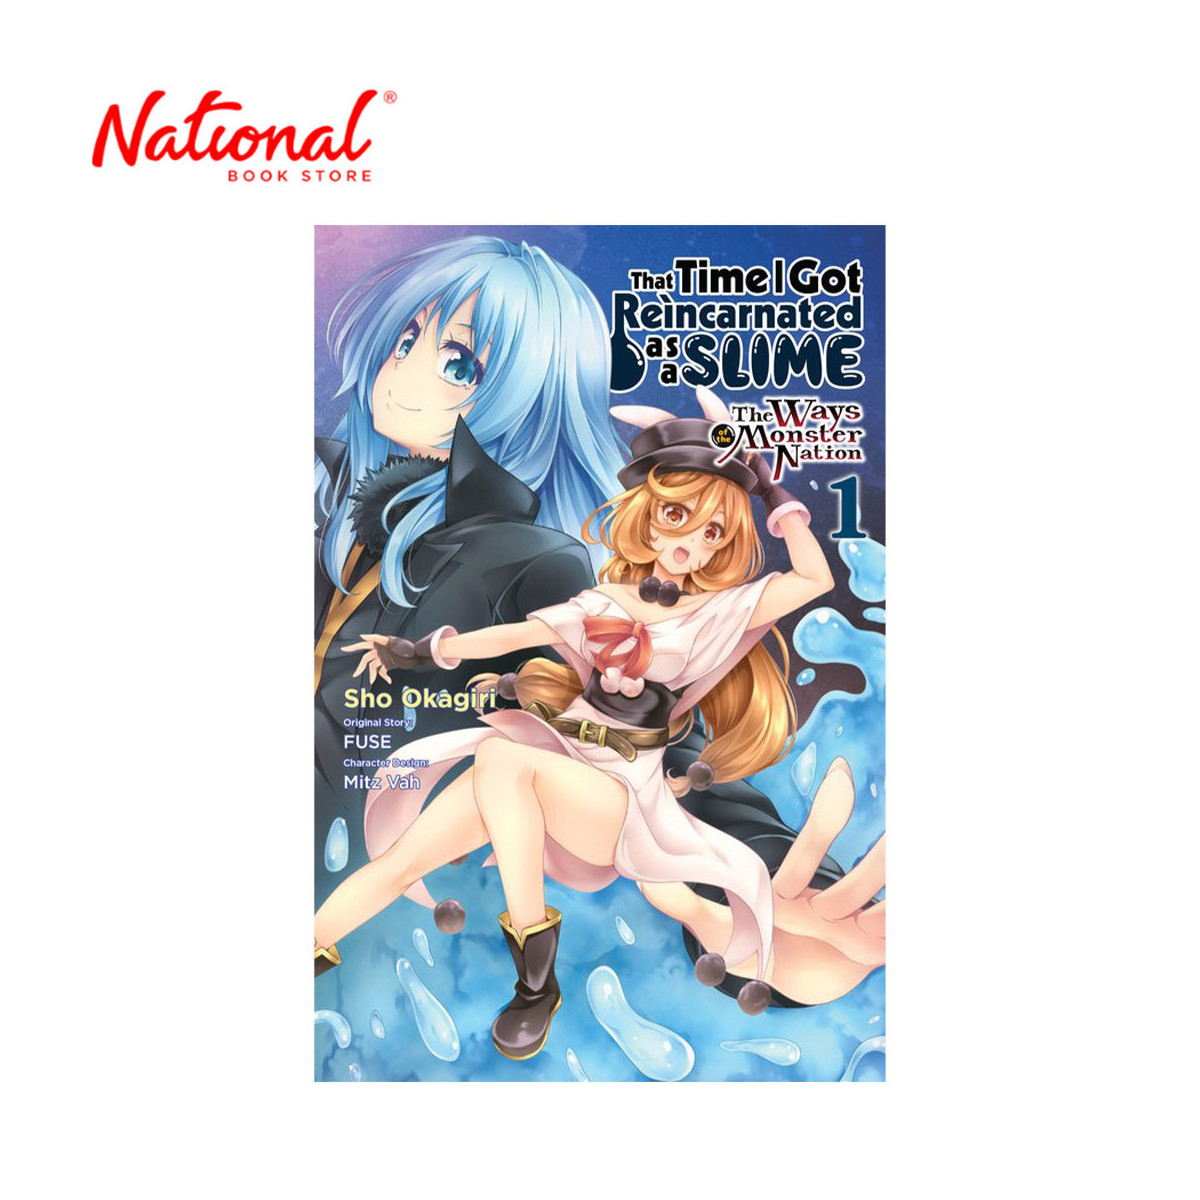 That Time I Got Reincarnated As A Slime, Volume 1 (Manga) by Sho Okagiri - Trade Paperback - Teens